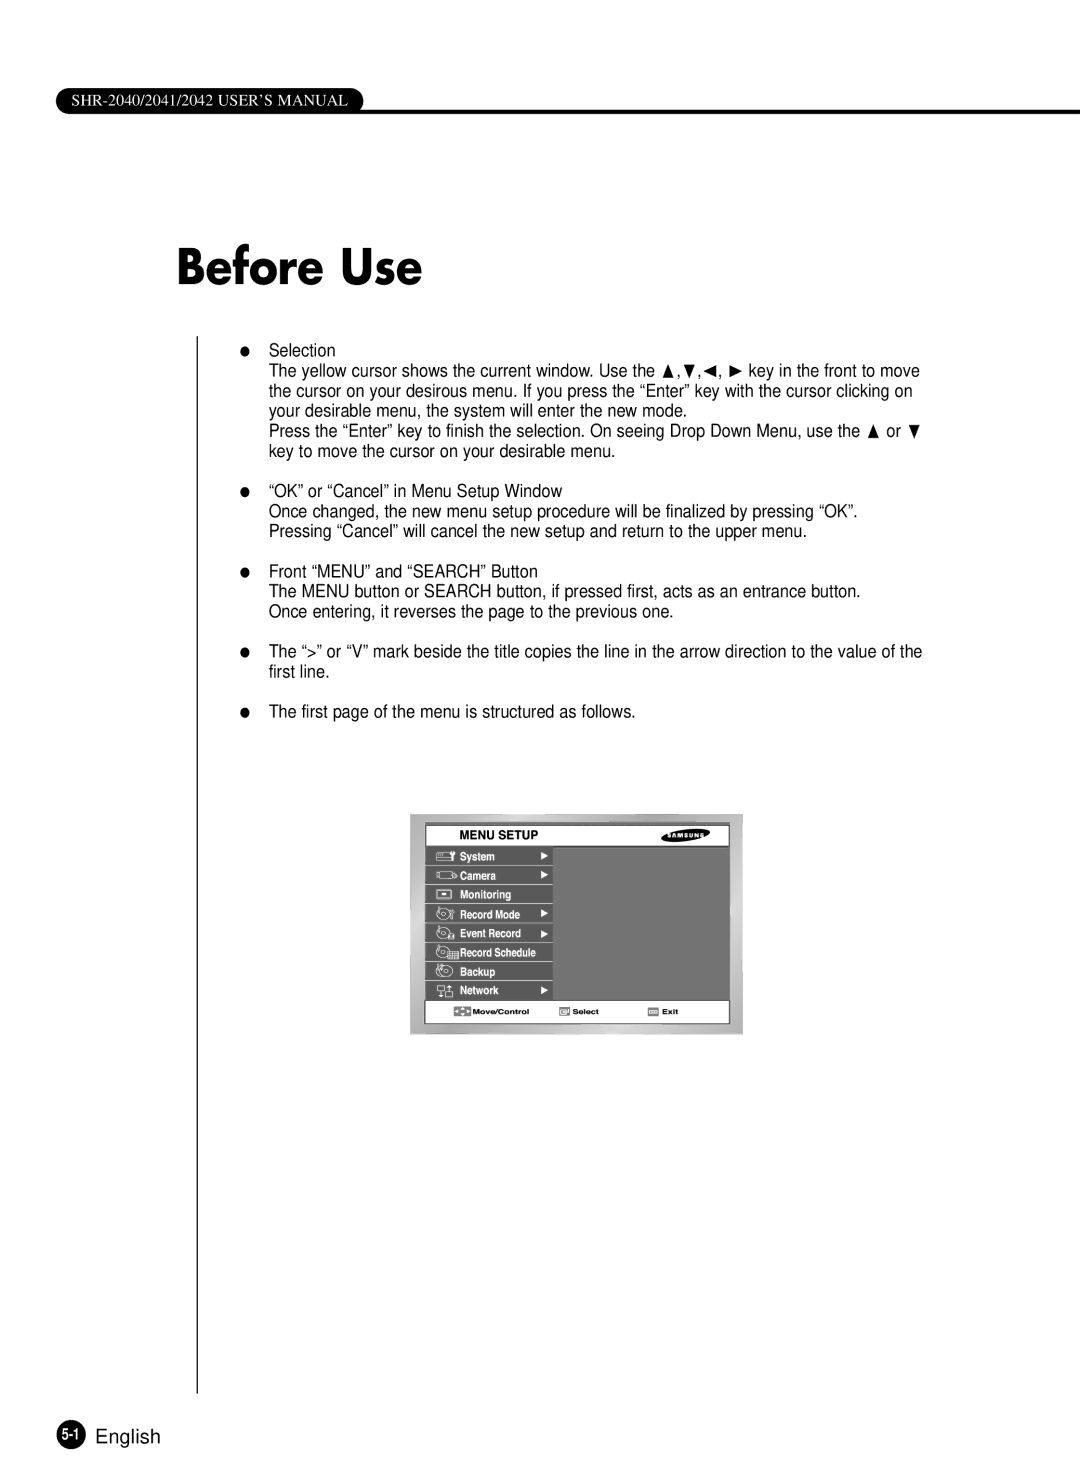 Samsung SHR-2040P, SHR-2040N manual Before Use, 1English 